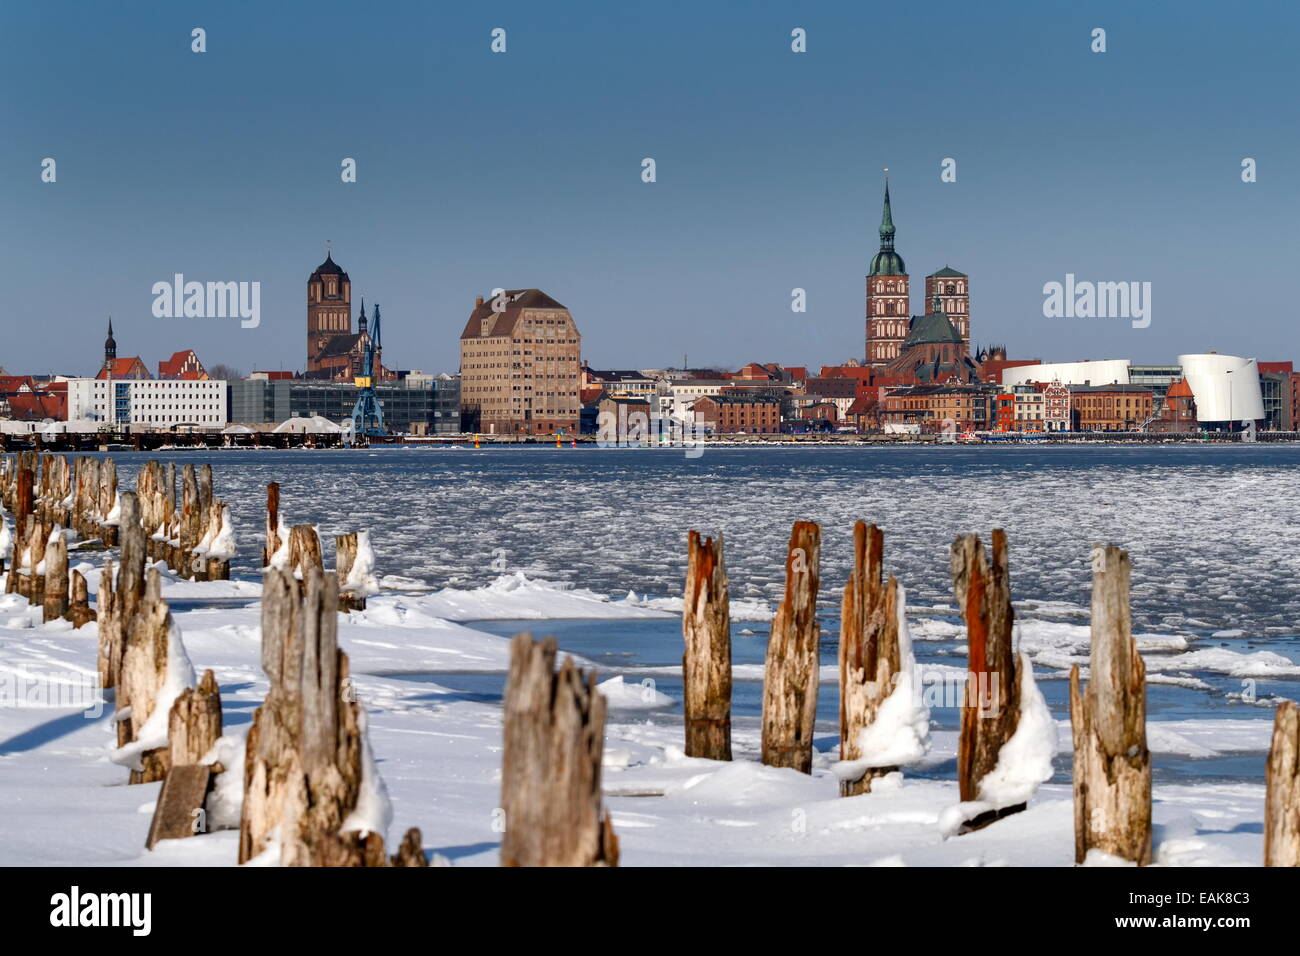 Centro storico di Stralsund in inverno, Dänholm, Stralsund, Meclemburgo-Pomerania Occidentale, Germania Foto Stock